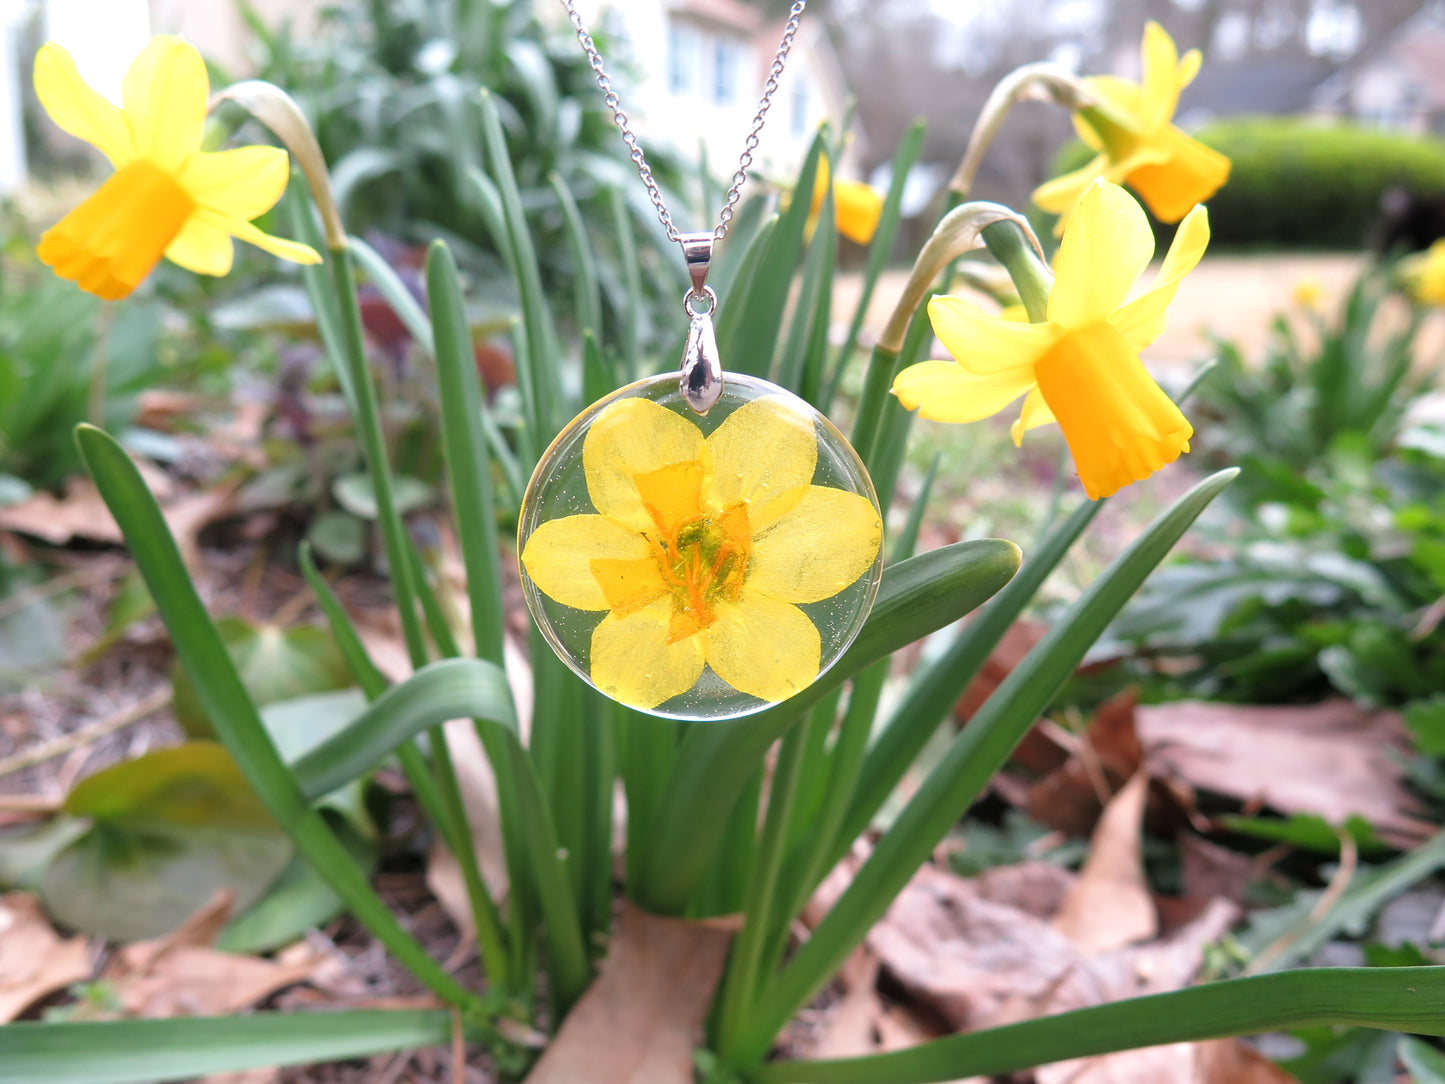 Daffodil flower Neckllace, Birth month flower March